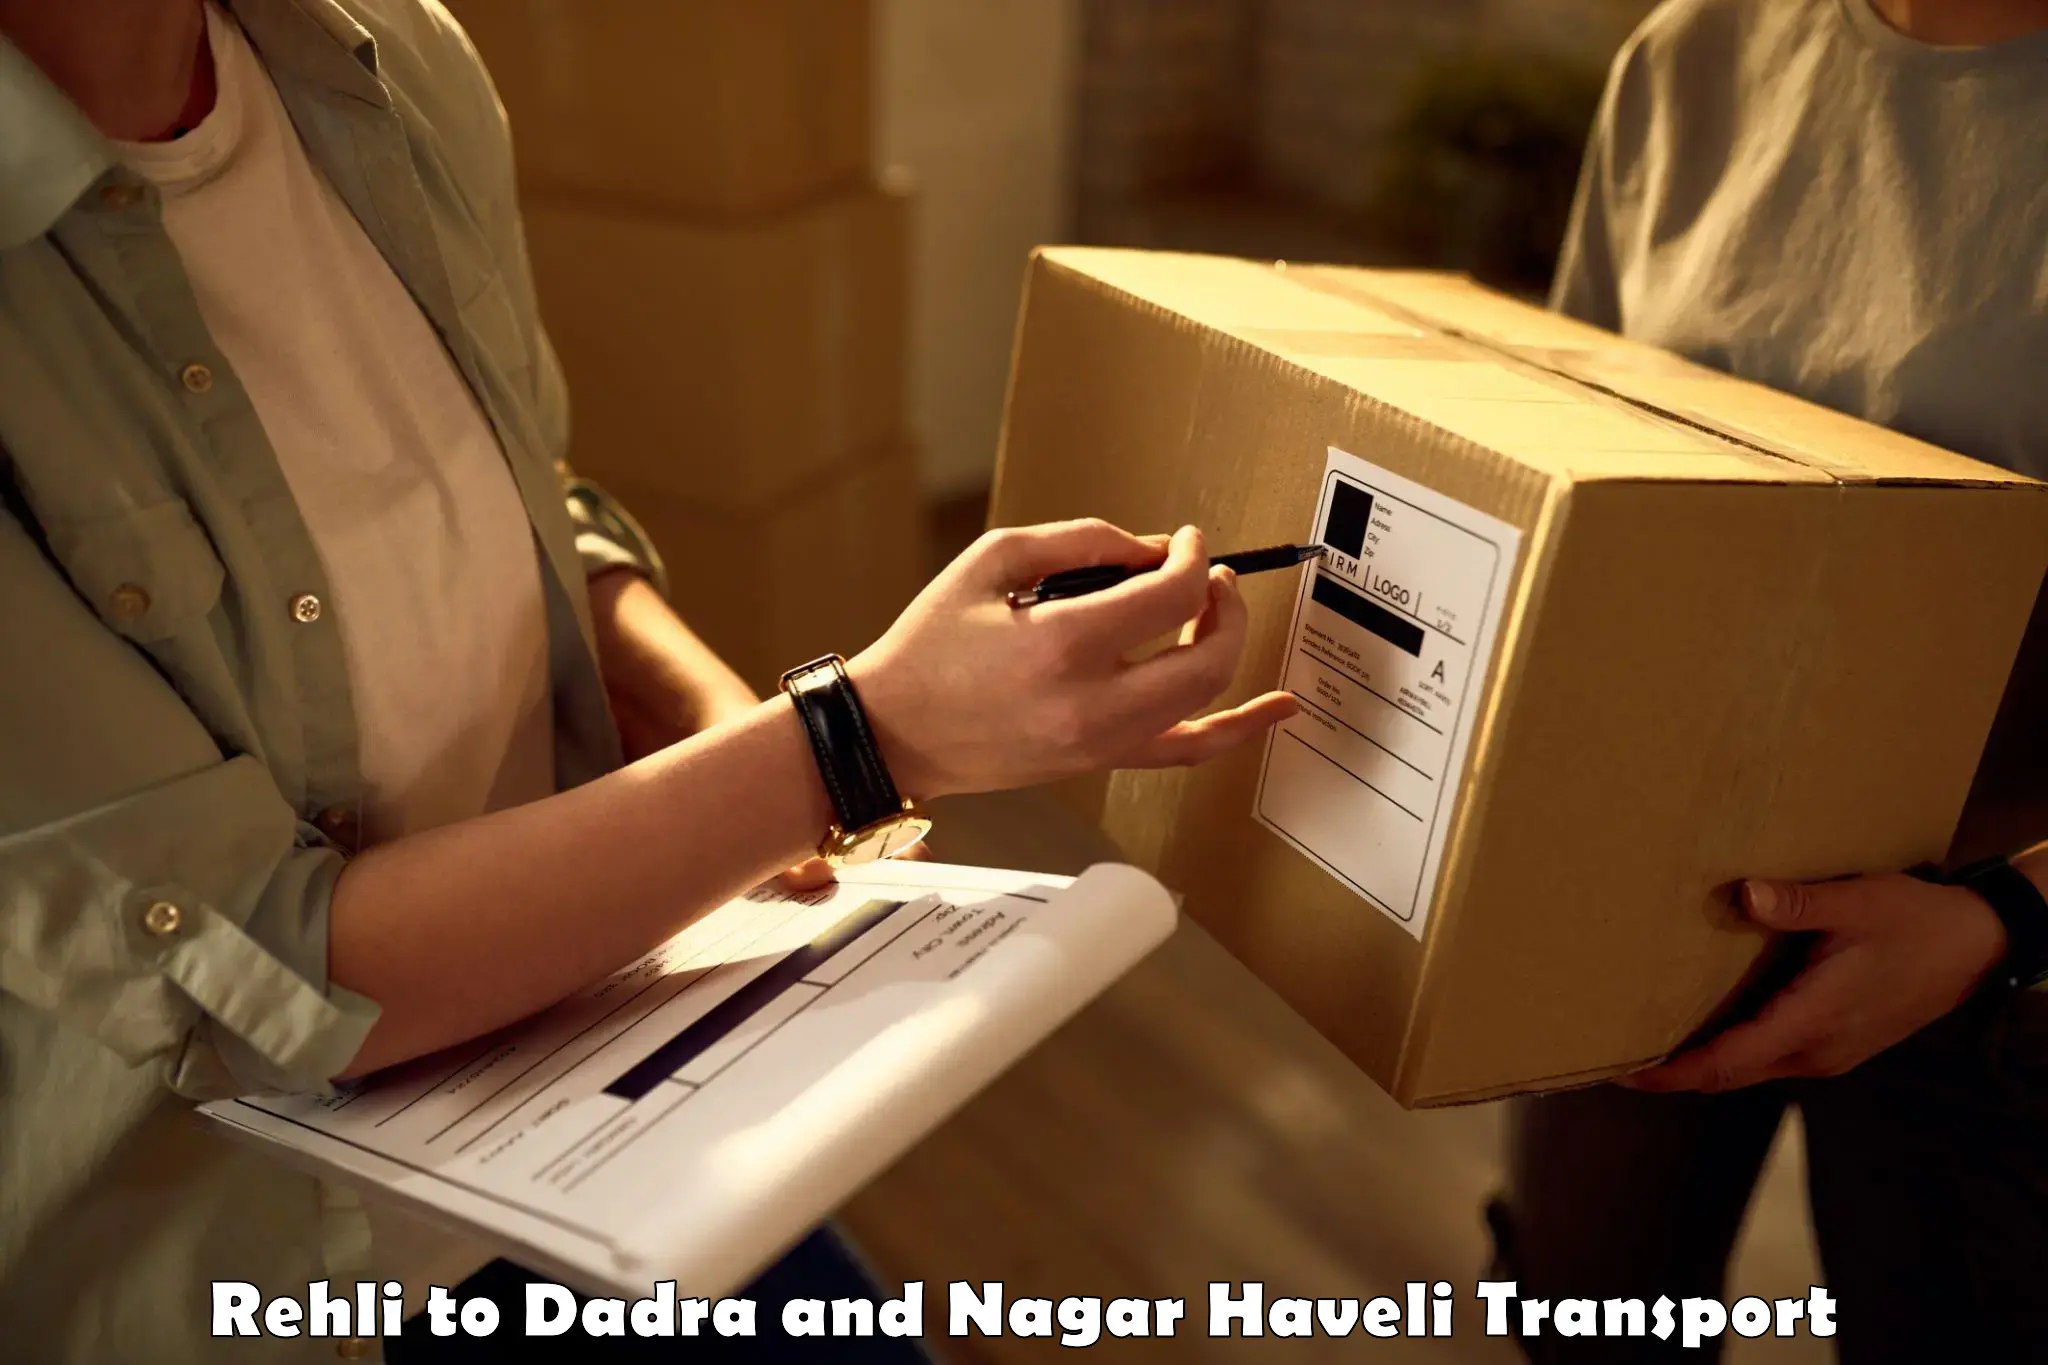 Furniture transport service Rehli to Dadra and Nagar Haveli